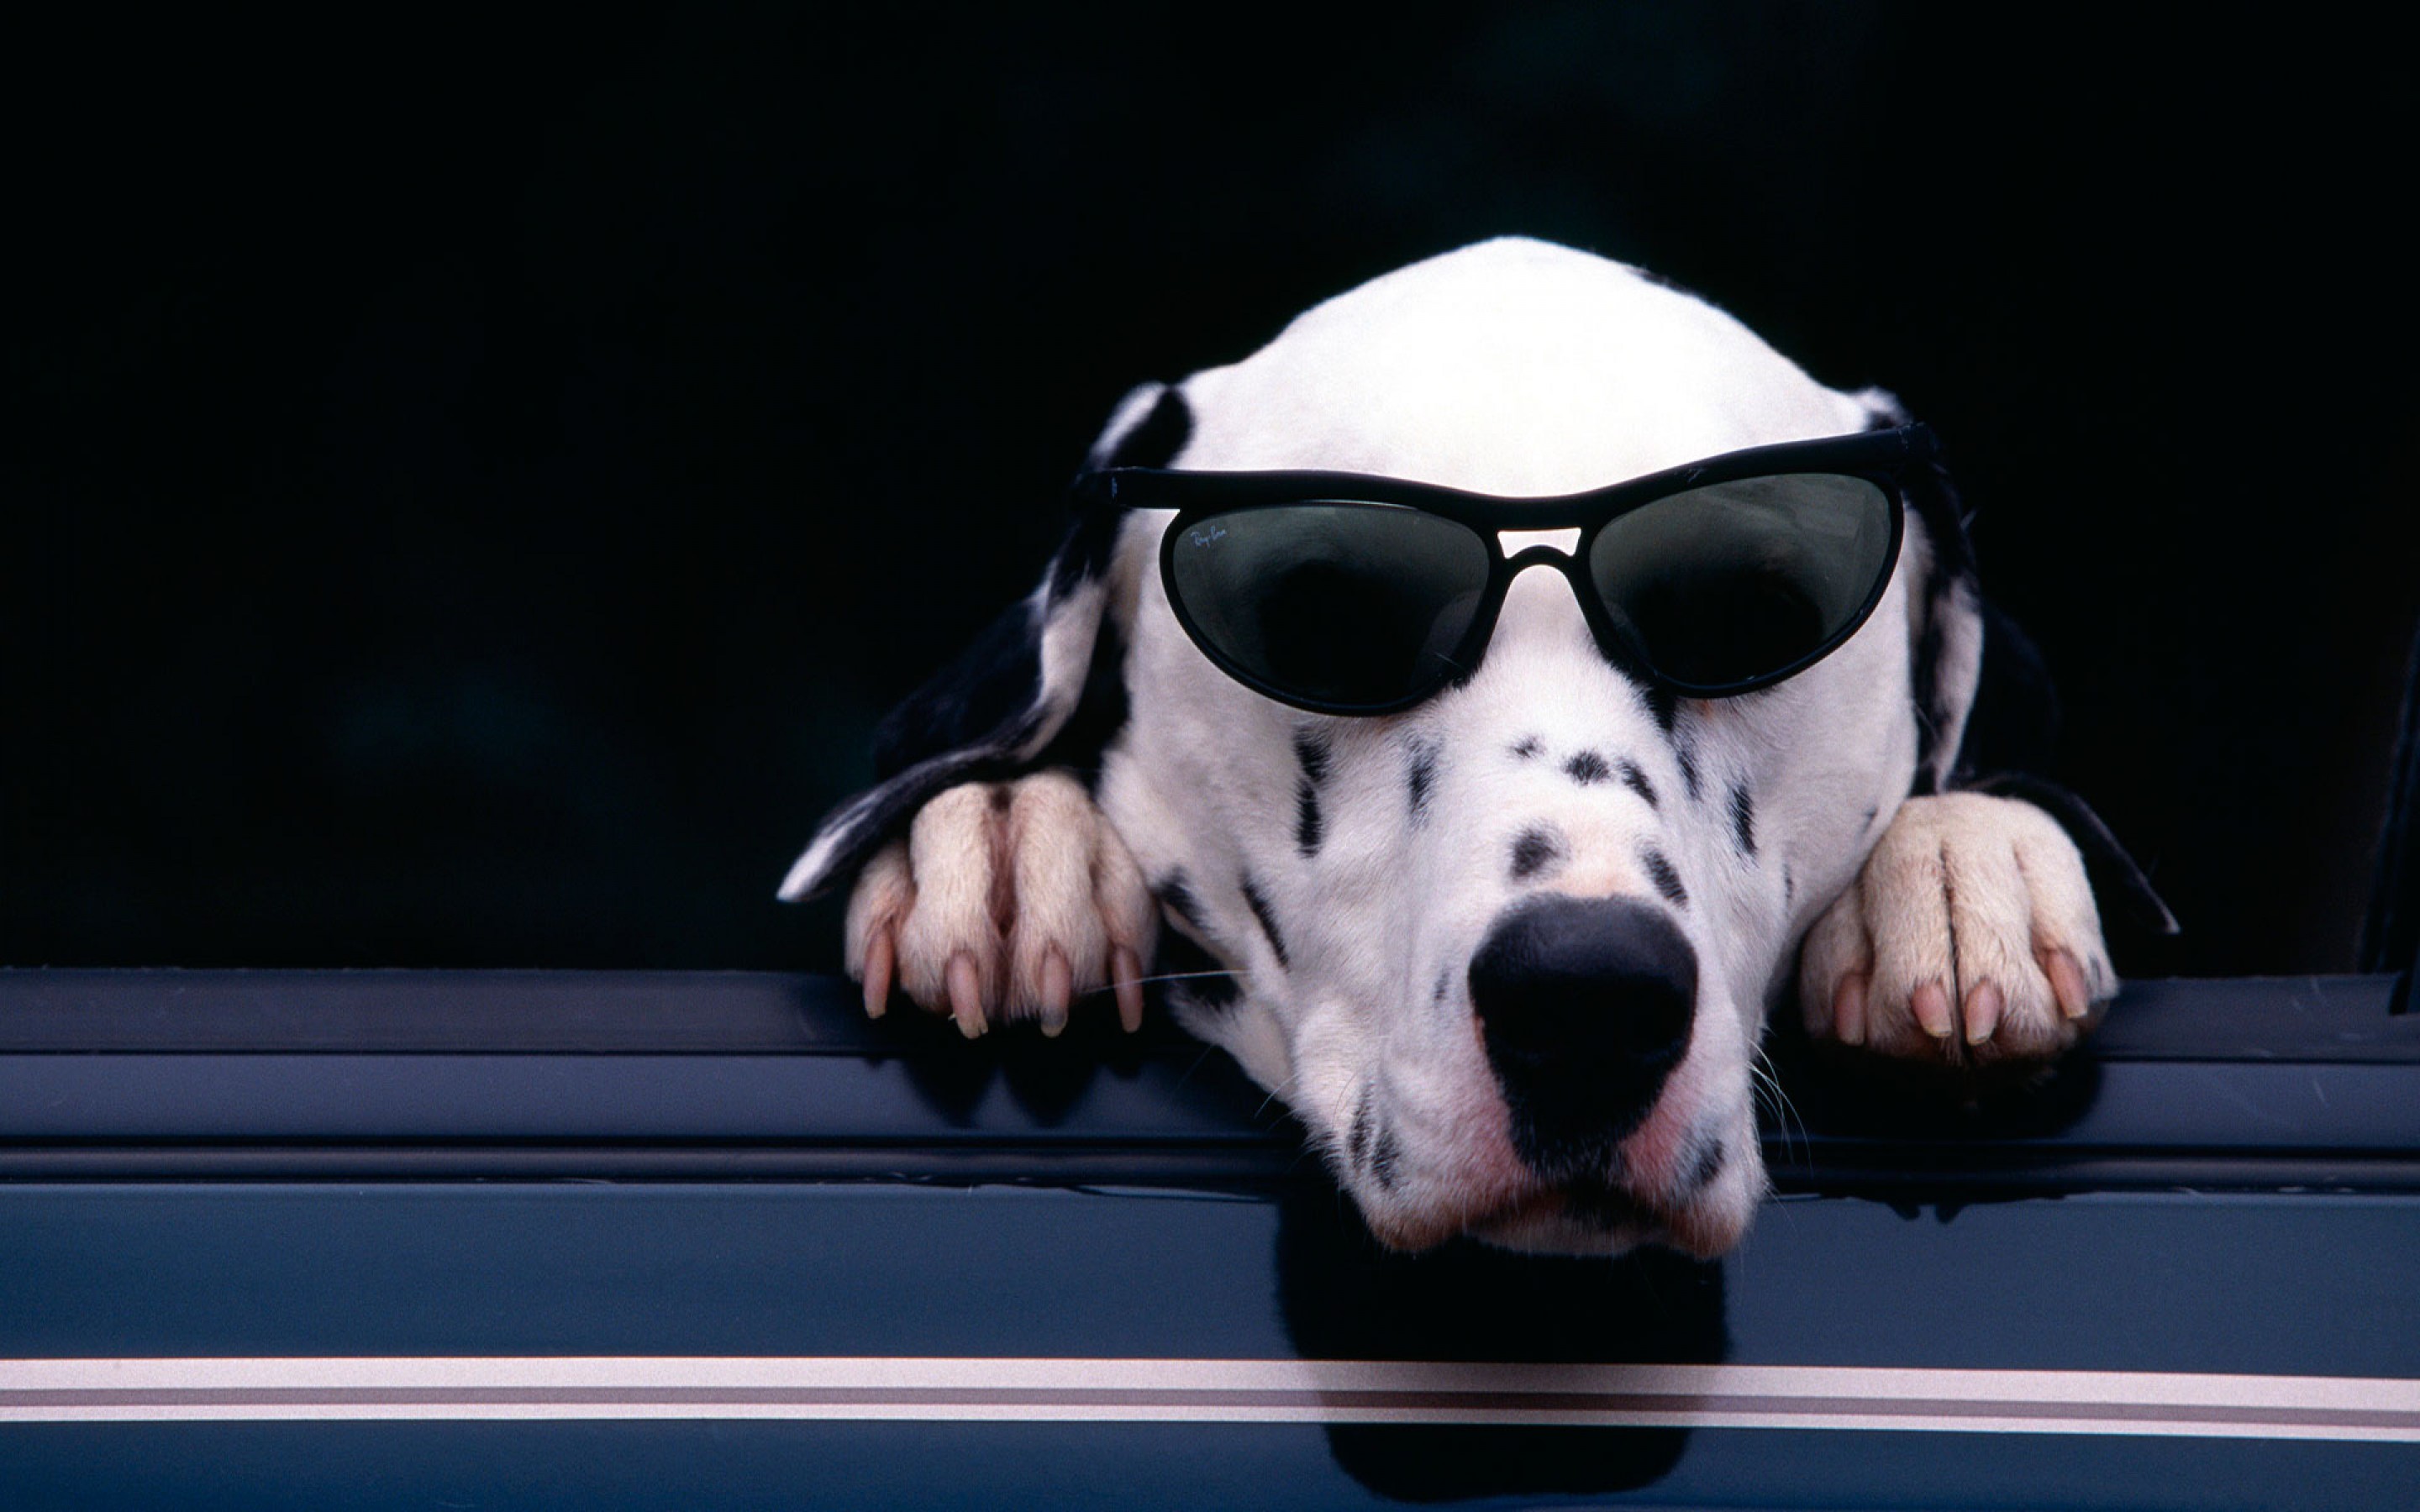 dalmatian dog funny